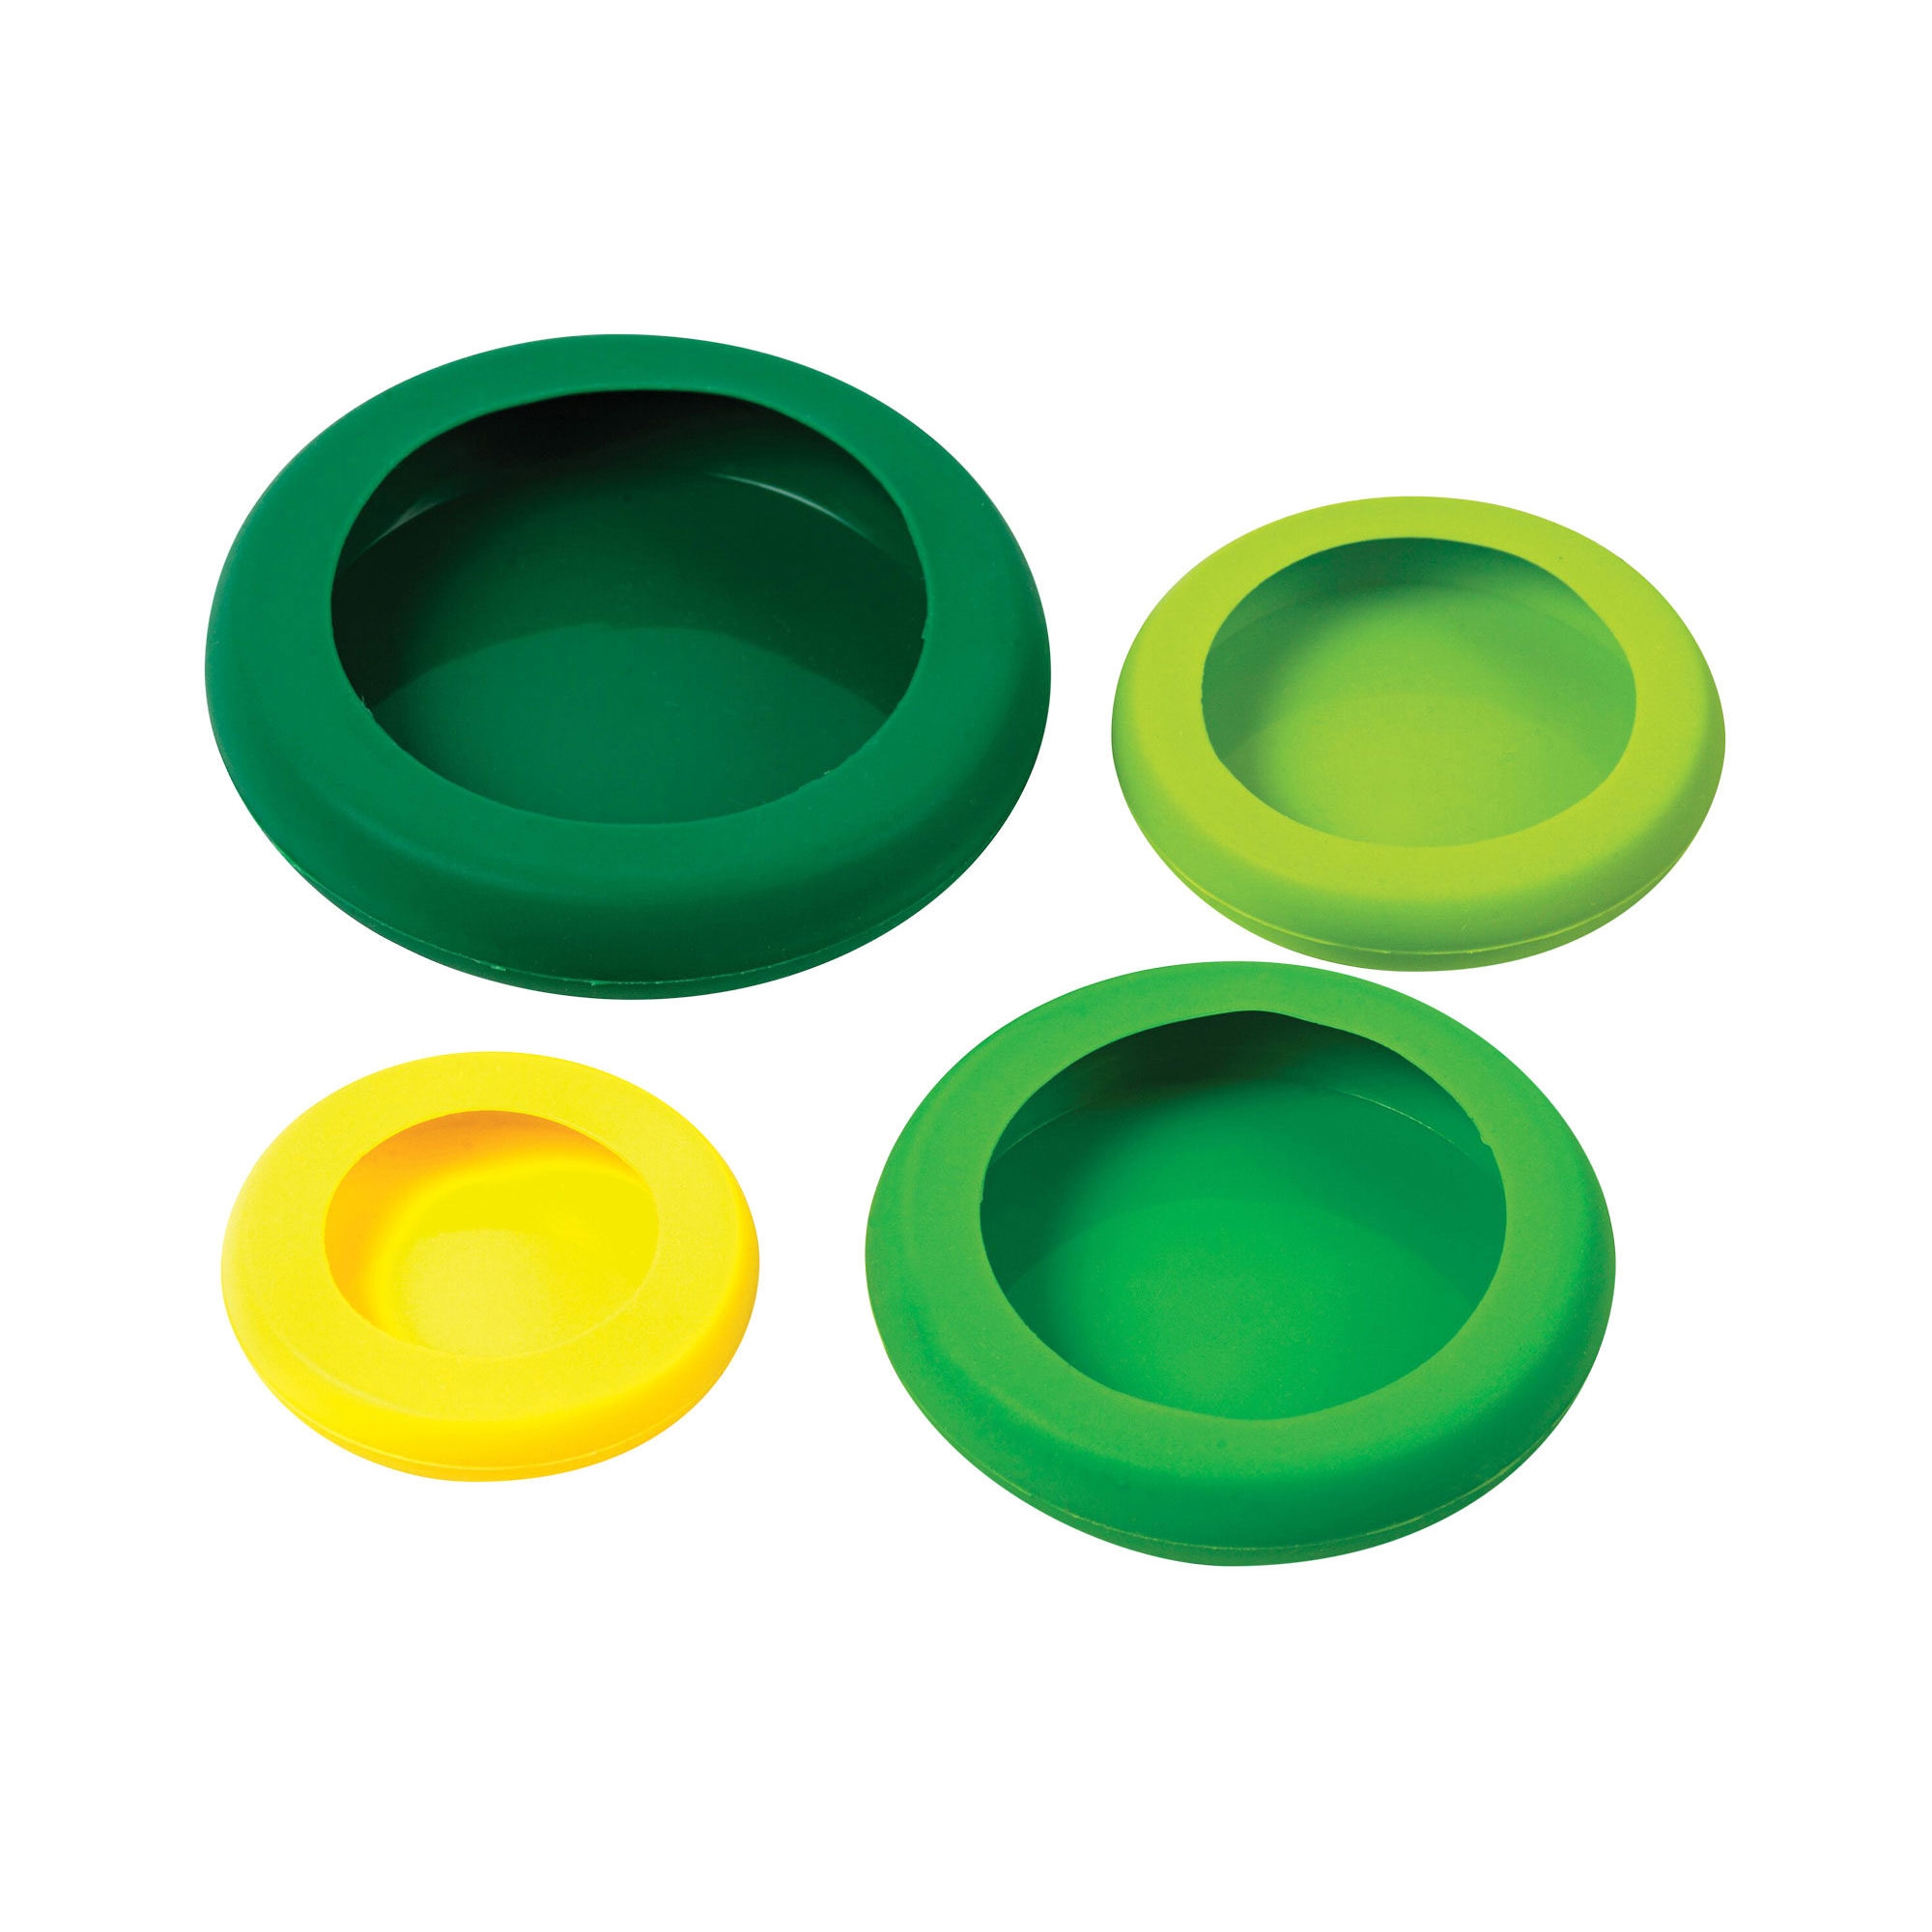 Avanti Hugger Food Saver Set of 4 Green/Yellow Image 1